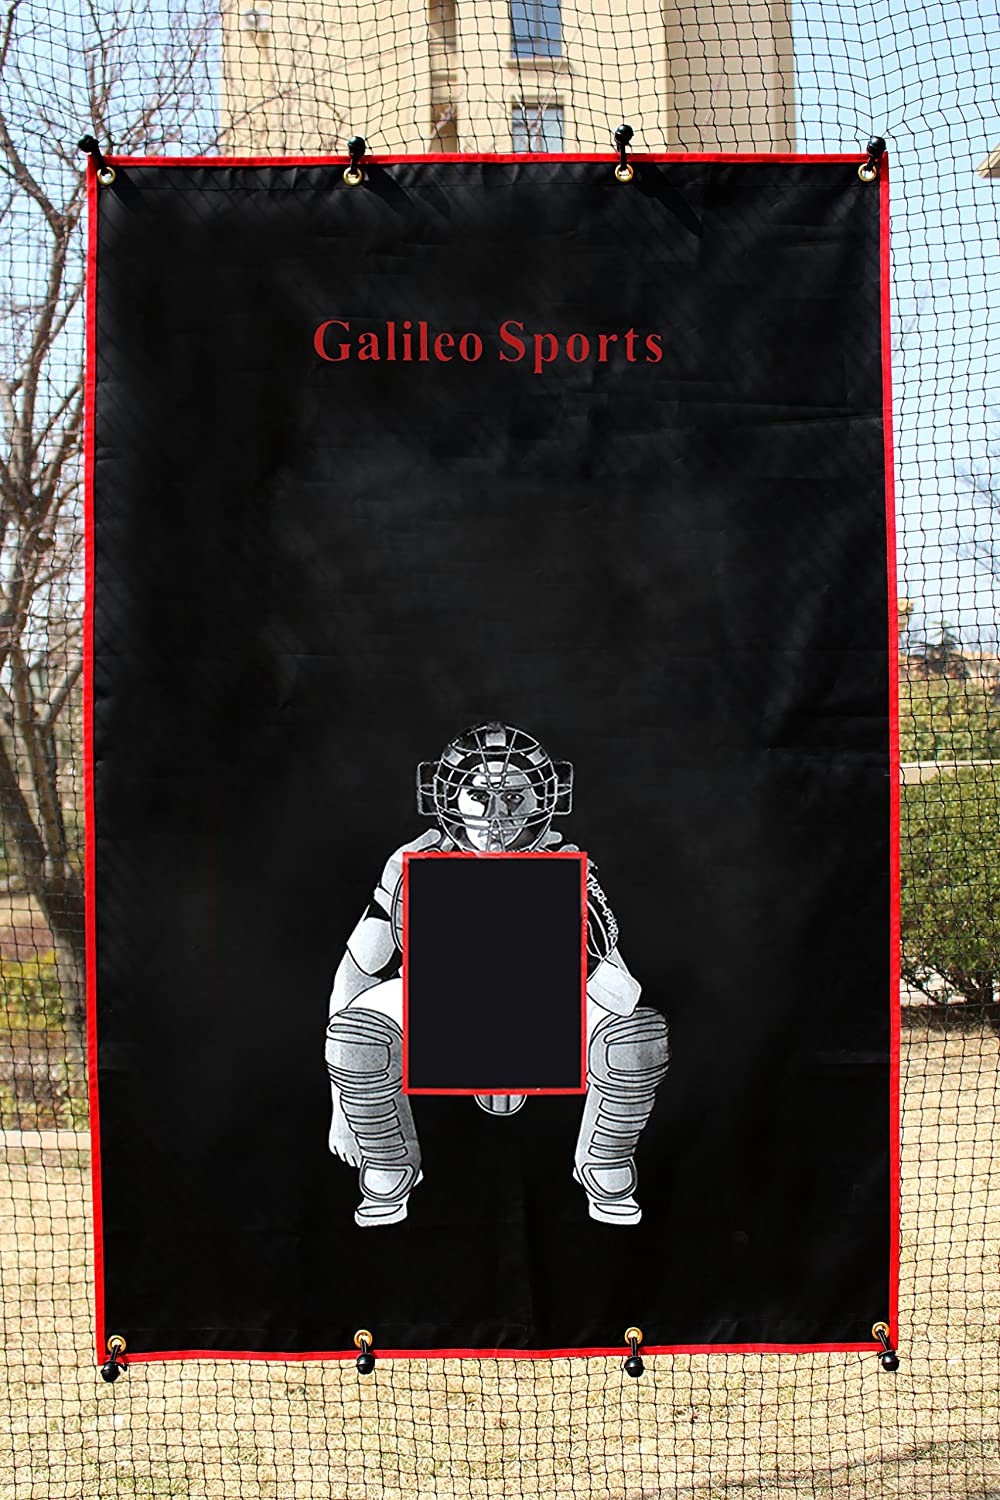 Galileo Softball Backstop Vinilo Heavy Duty Baseball Bating Cage Backstop Pitching Target Trainer Backstop Net Saver 